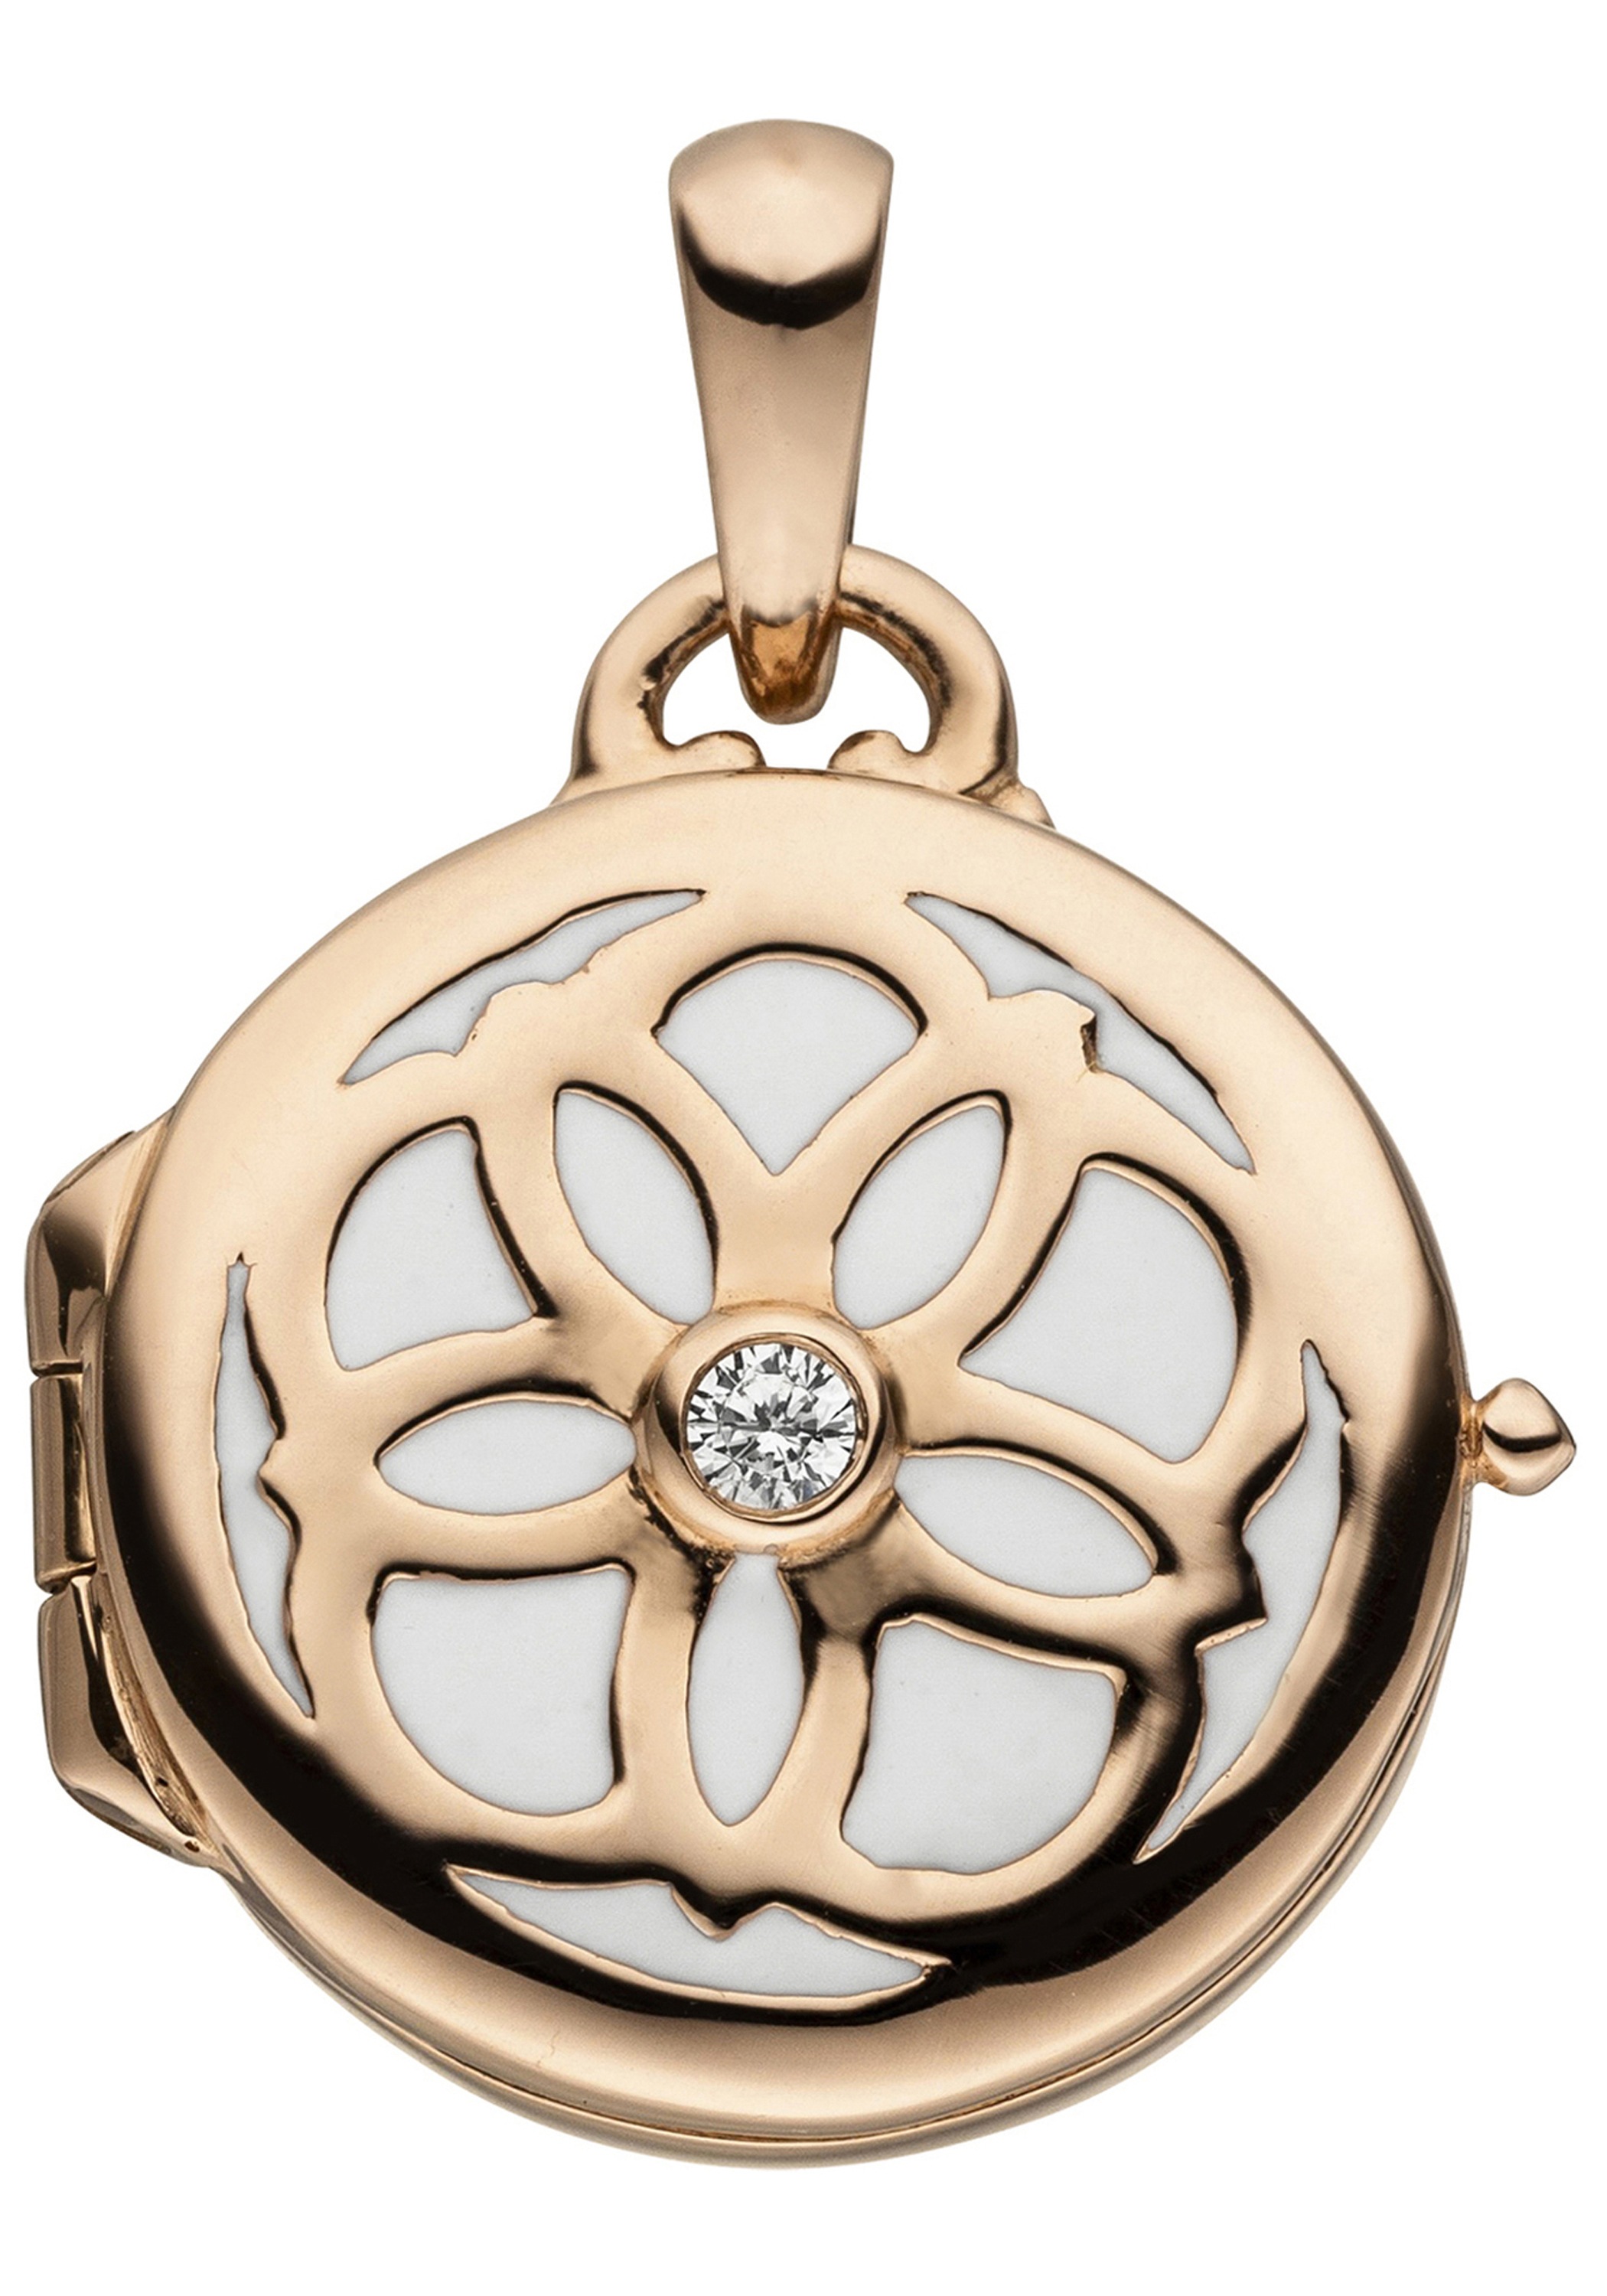 JOBO Medallionanhänger mit kaufen »Kleines online BAUR Silber roségold Zirkonia | 925 Medaillon«, vergoldet